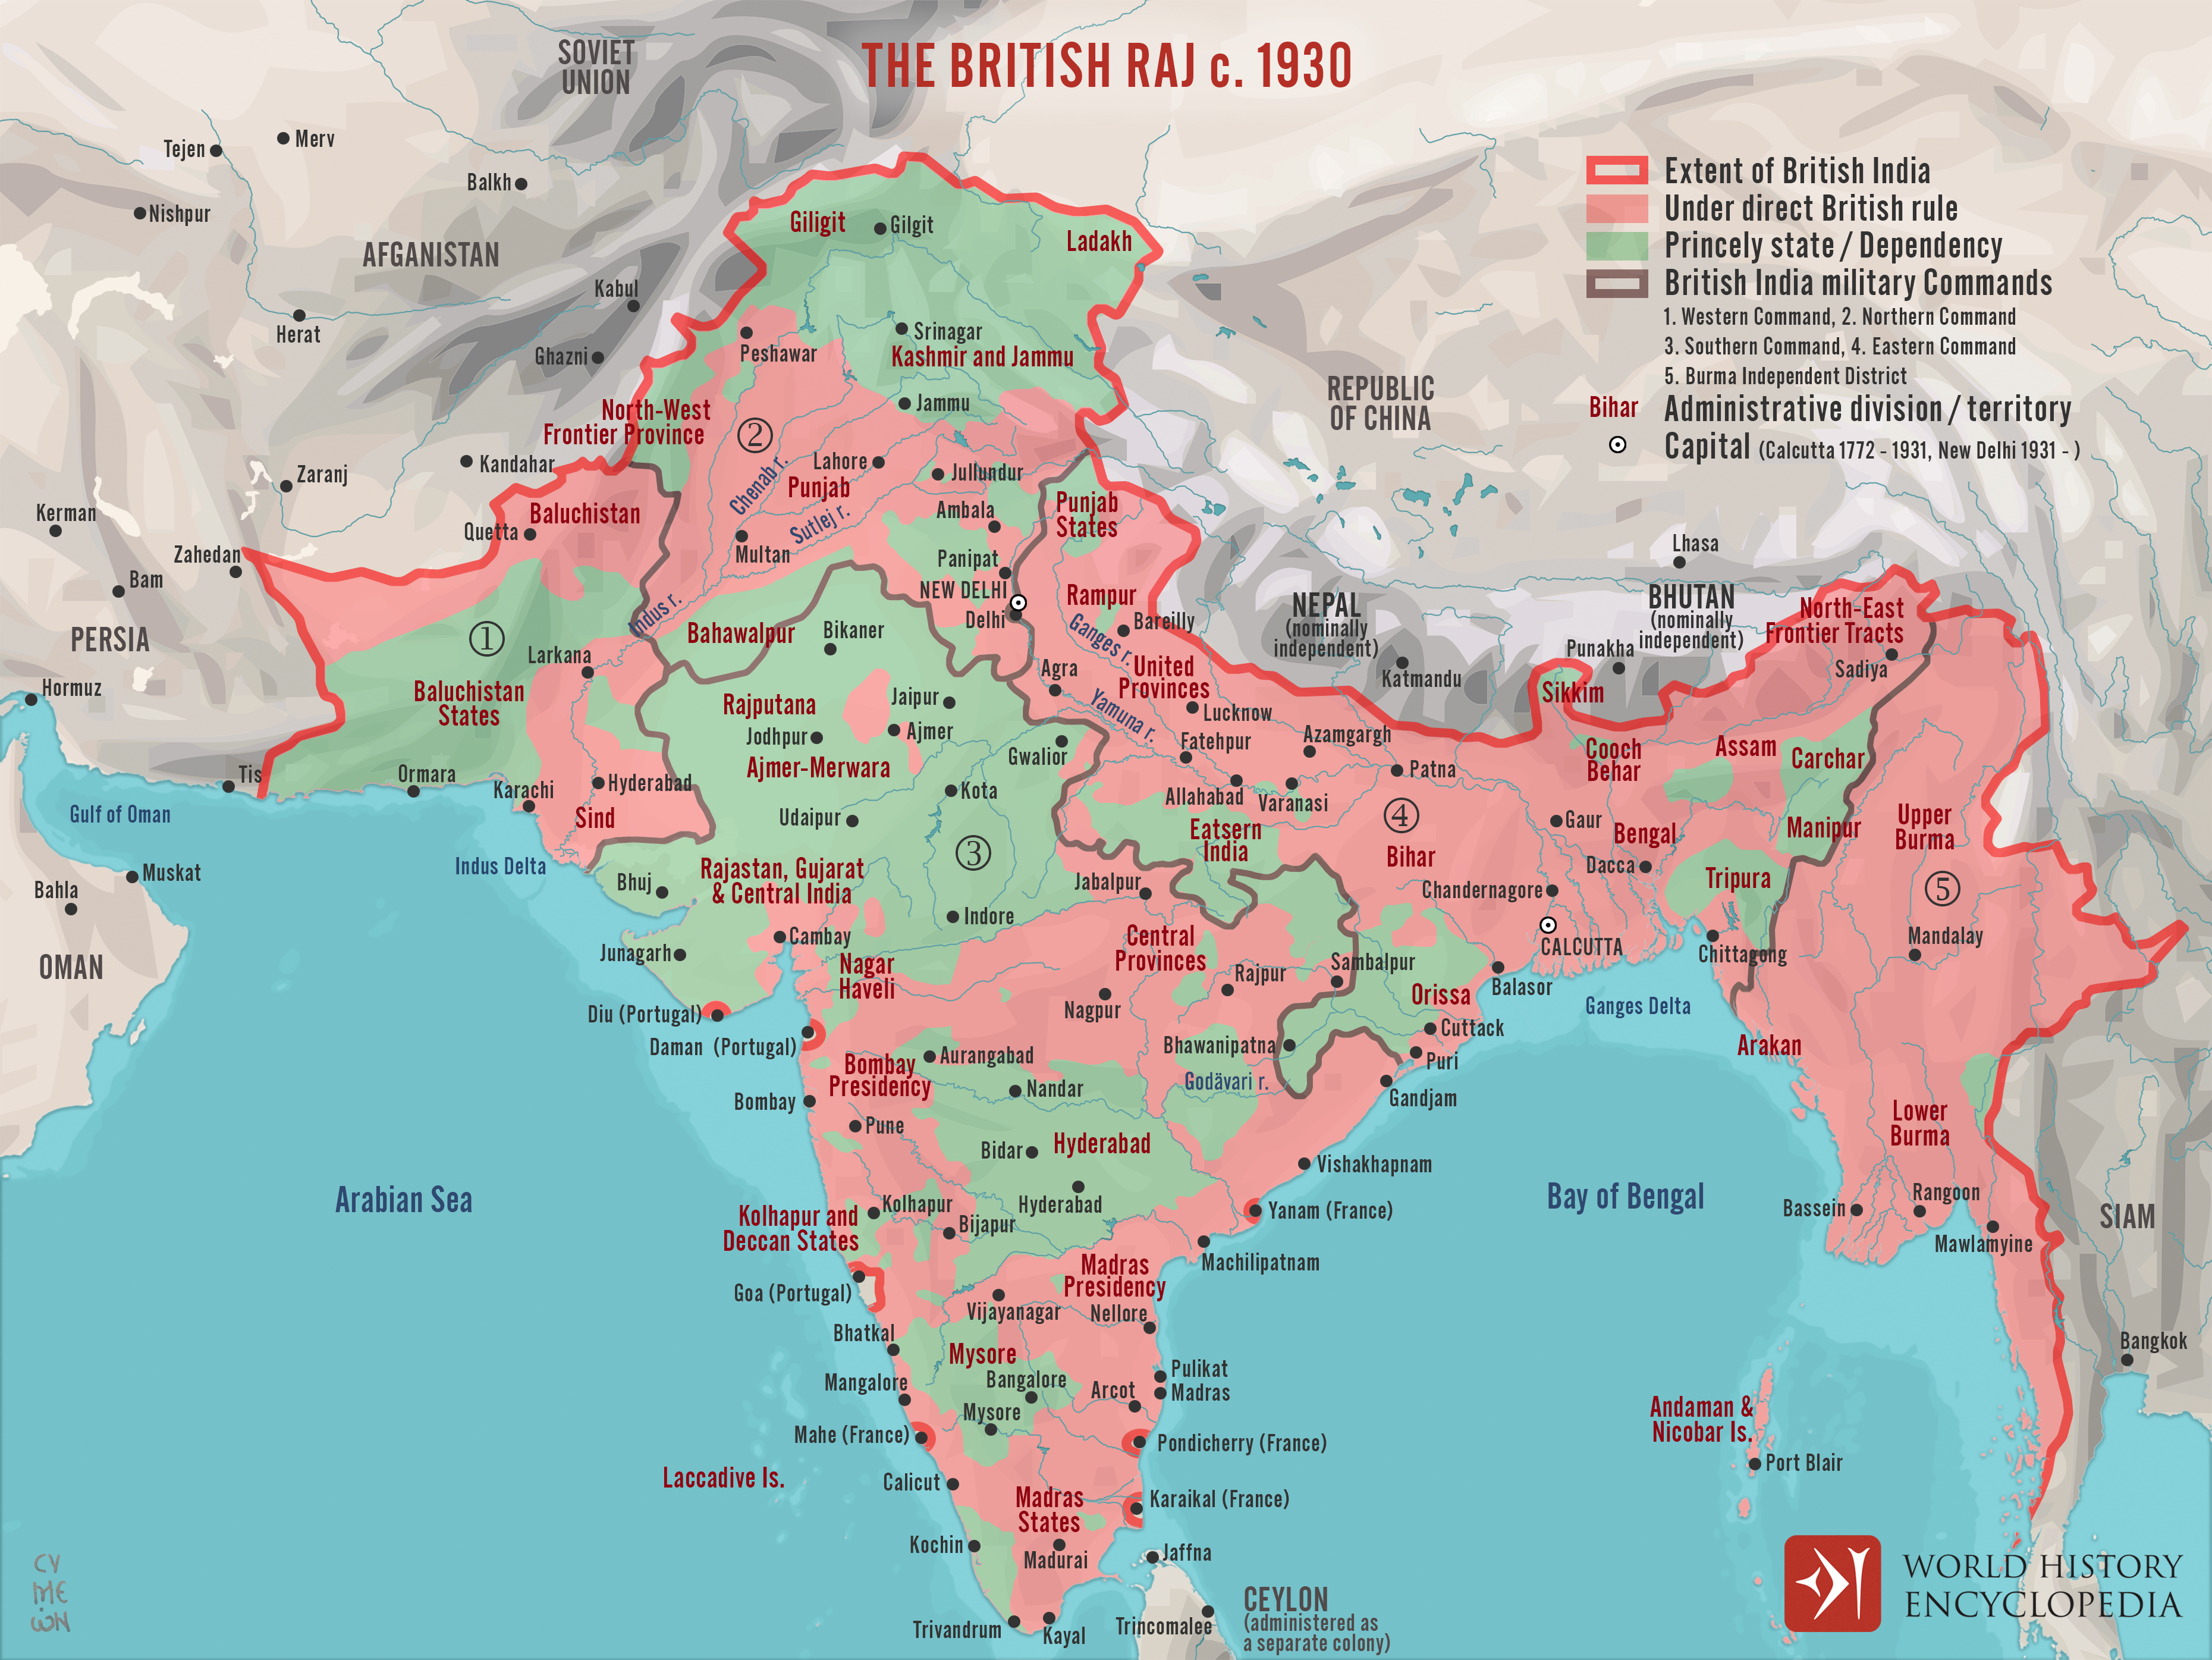 princely states and India under the British Raj circa 1930